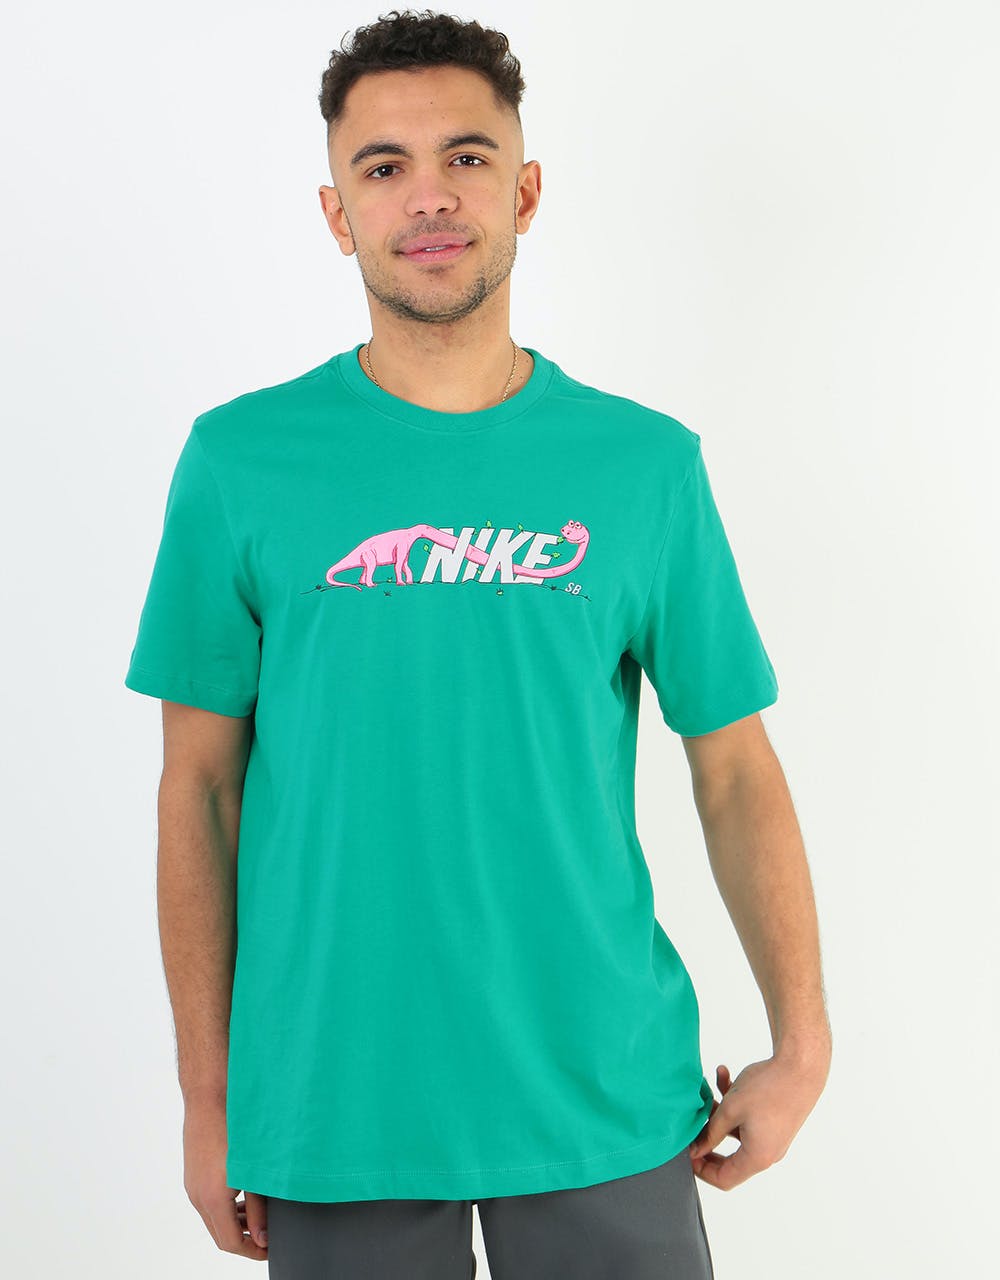 Nike SB Dinonike T-Shirt - Neptune Green